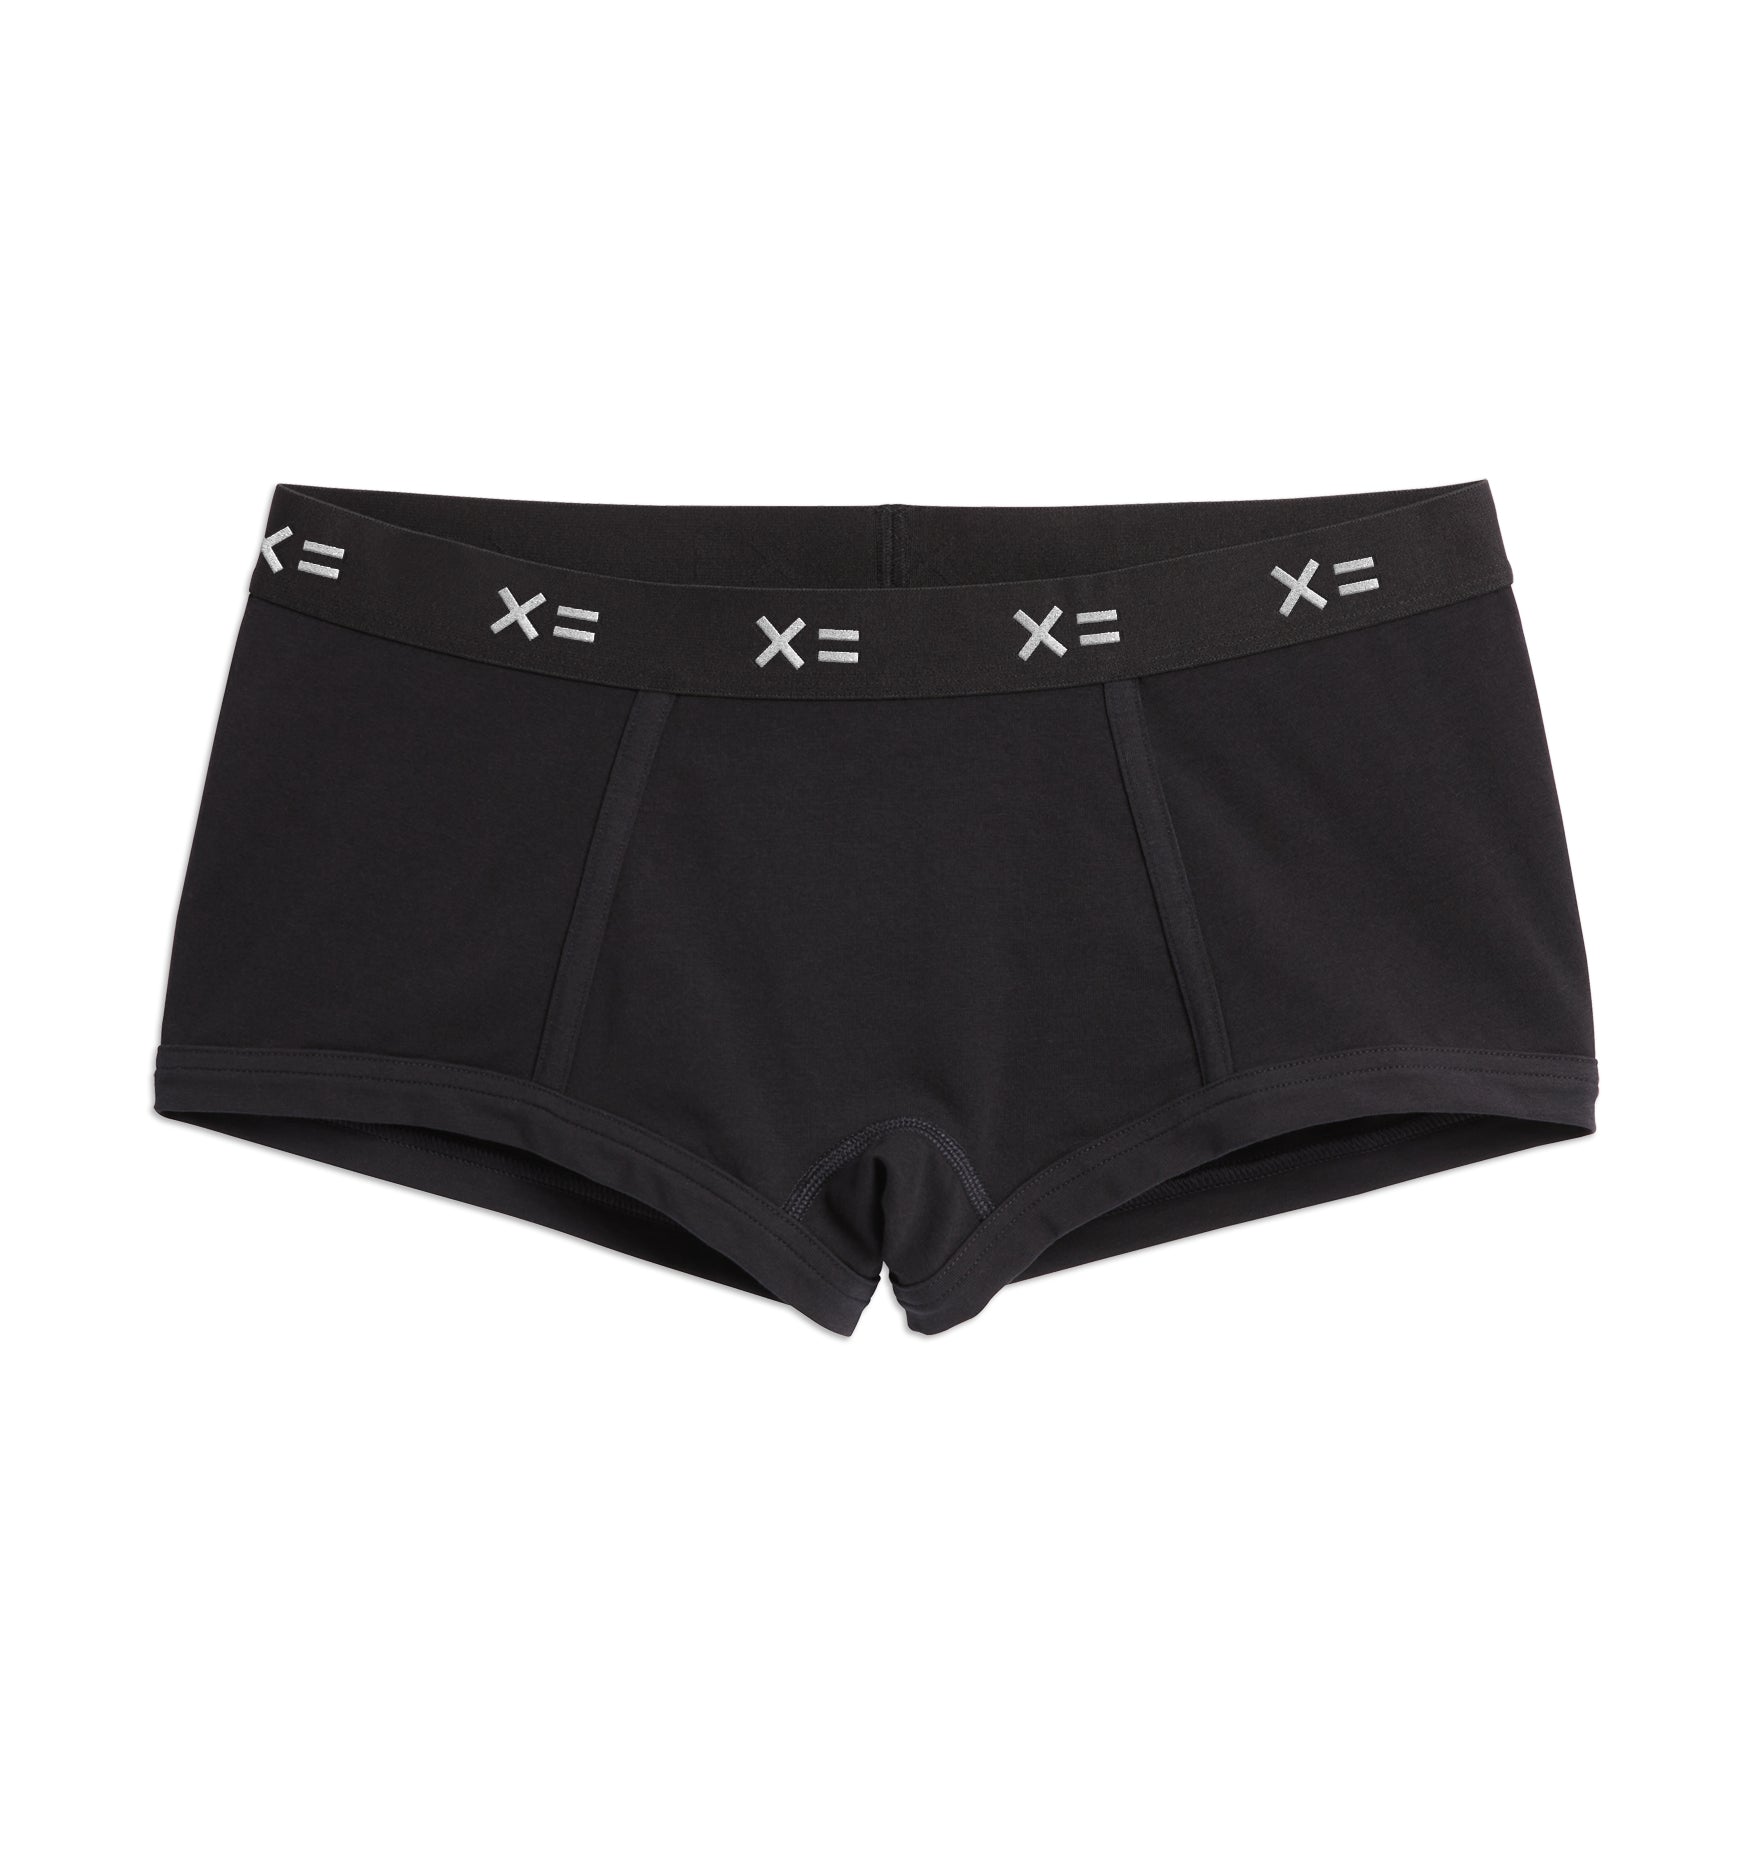 Boy Shorts LC - Black X= Shine